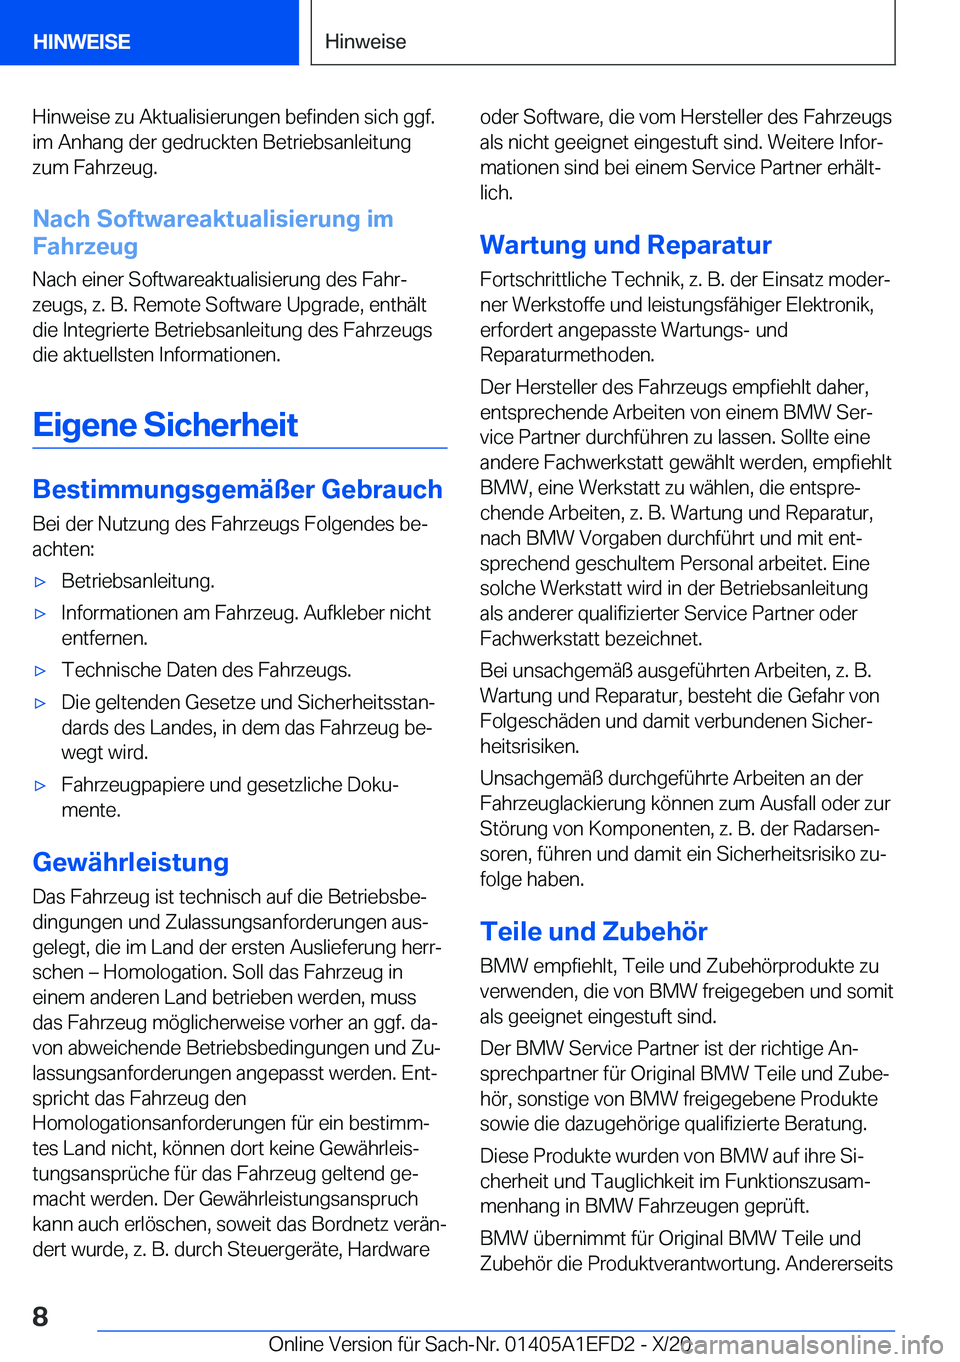 BMW X7 2021  Betriebsanleitungen (in German) �H�i�n�w�e�i�s�e��z�u��A�k�t�u�a�l�i�s�i�e�r�u�n�g�e�n��b�e�f�i�n�d�e�n��s�i�c�h��g�g�f�.�i�m��A�n�h�a�n�g��d�e�r��g�e�d�r�u�c�k�t�e�n��B�e�t�r�i�e�b�s�a�n�l�e�i�t�u�n�g�z�u�m��F�a�h�r�z�e�u